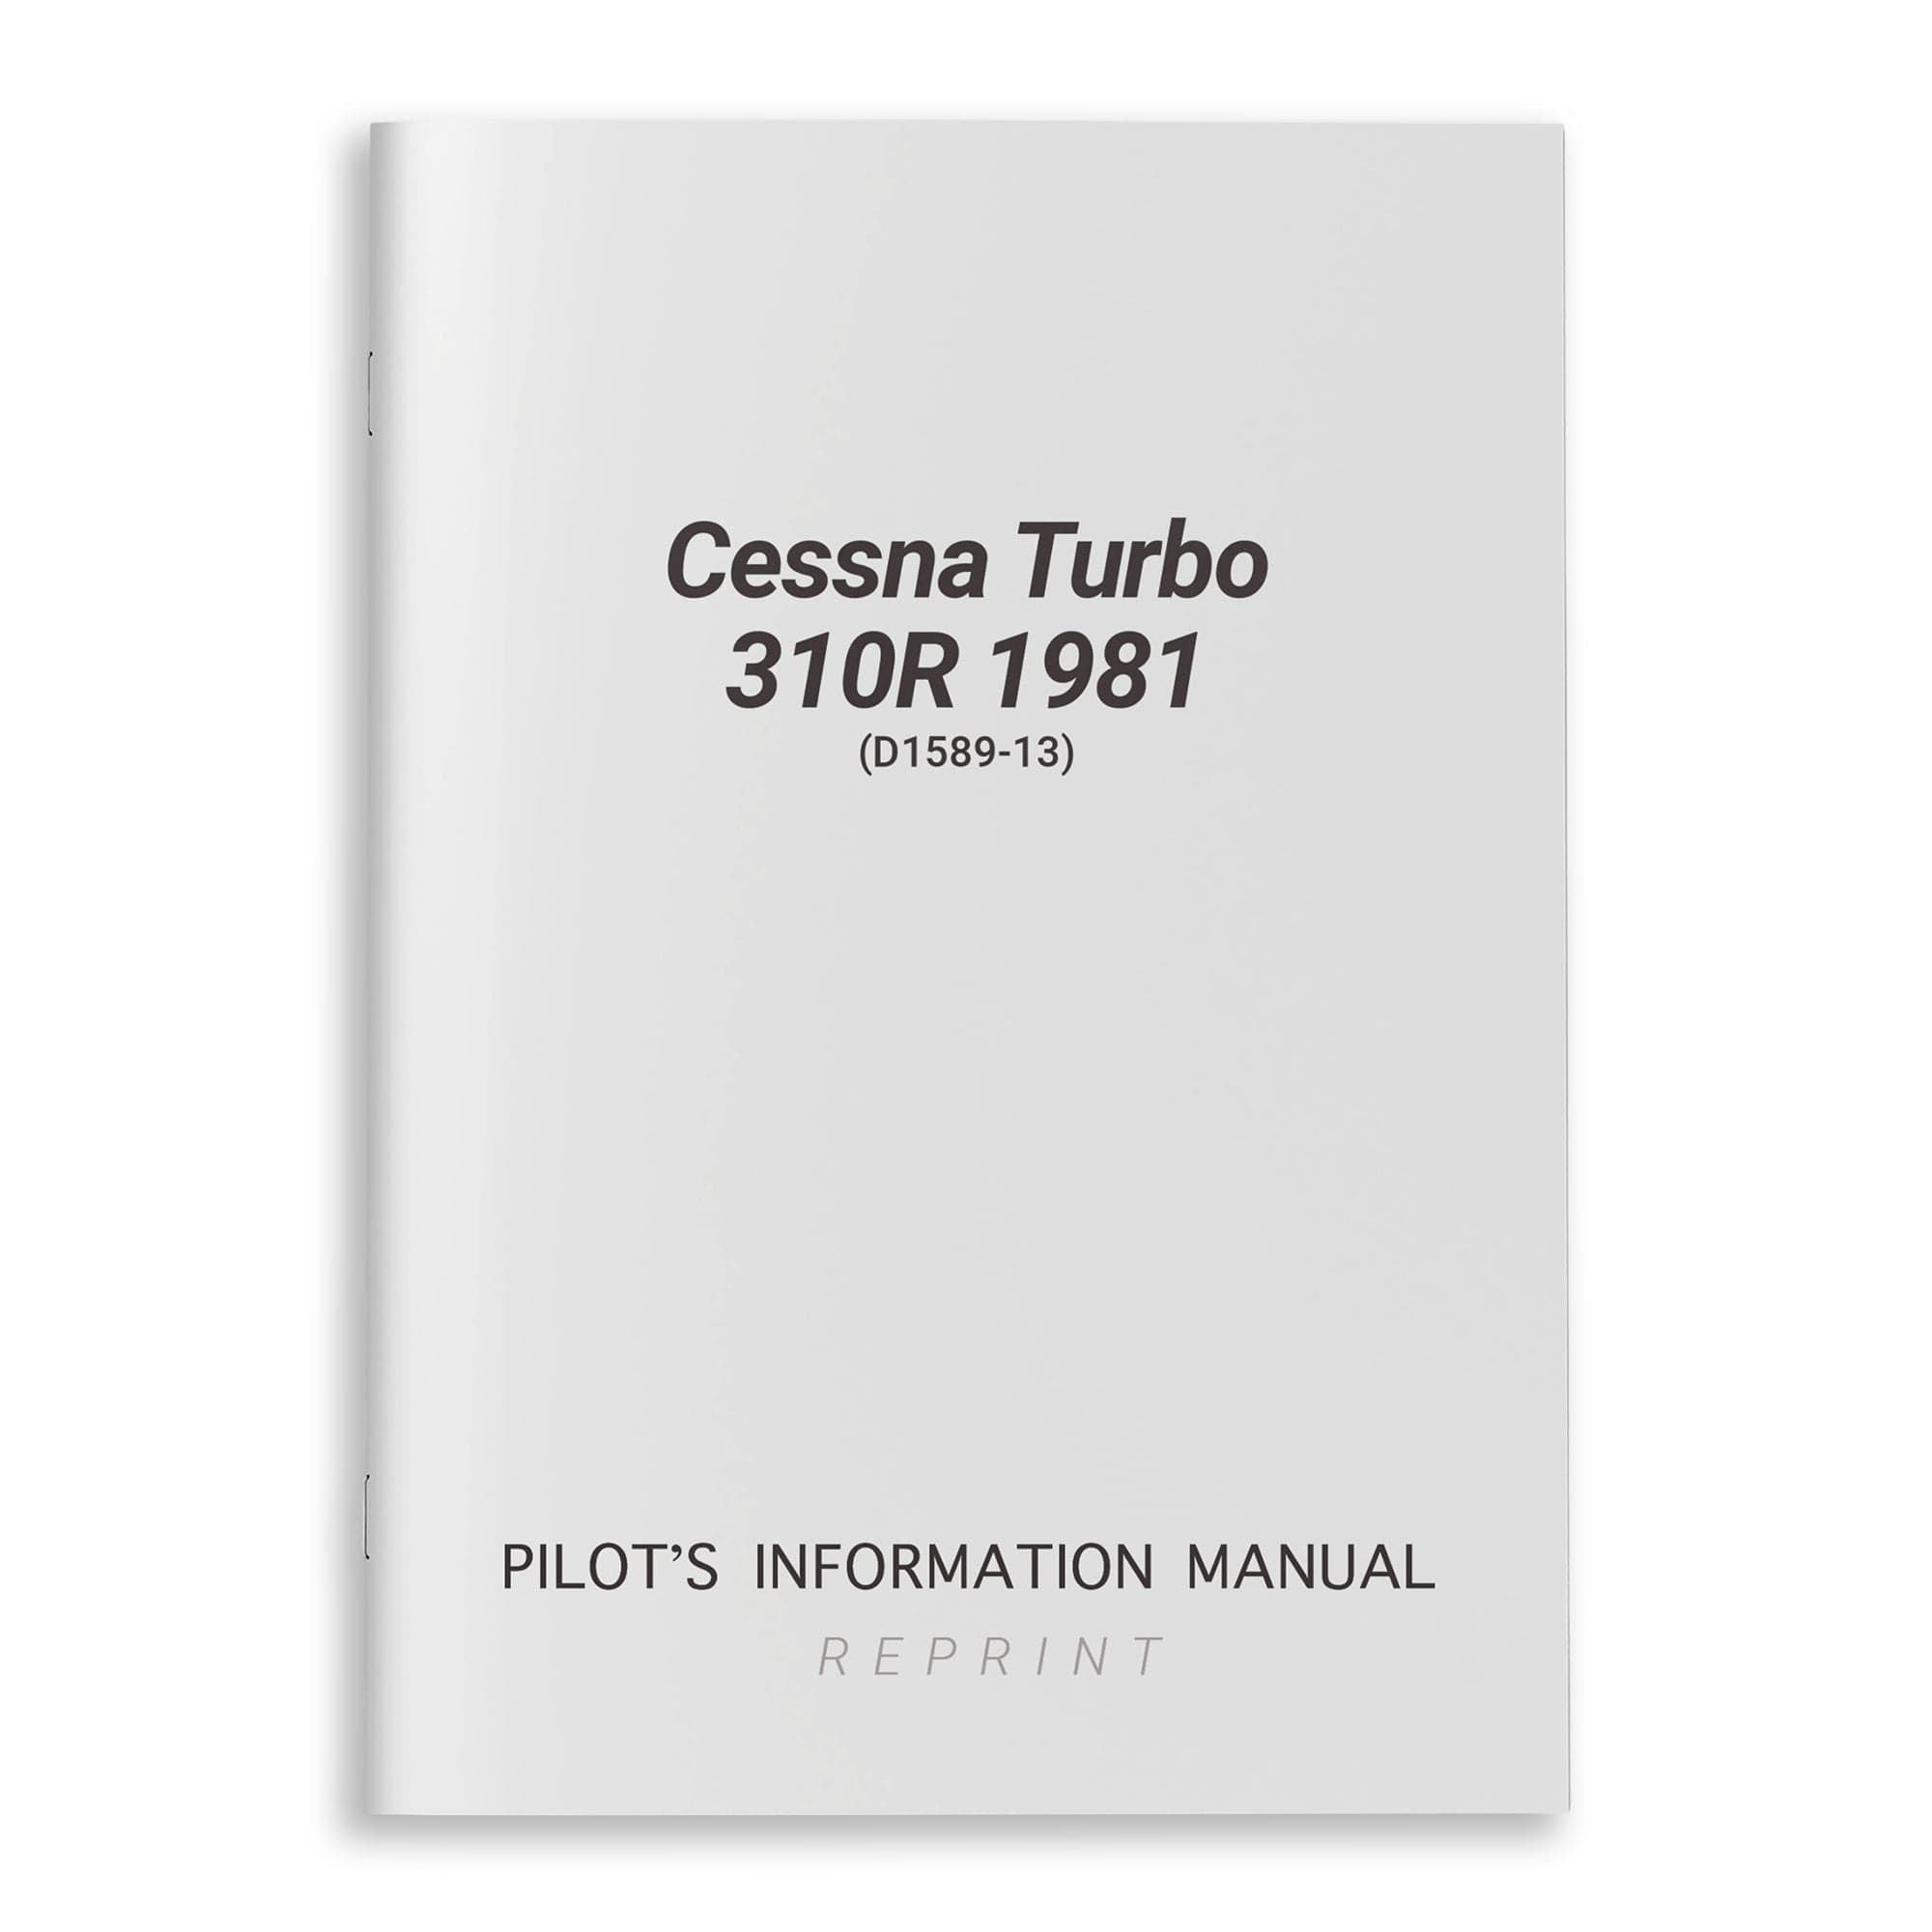 Cessna Turbo 310R 1981 Pilot's Information Manual (D1589-13)